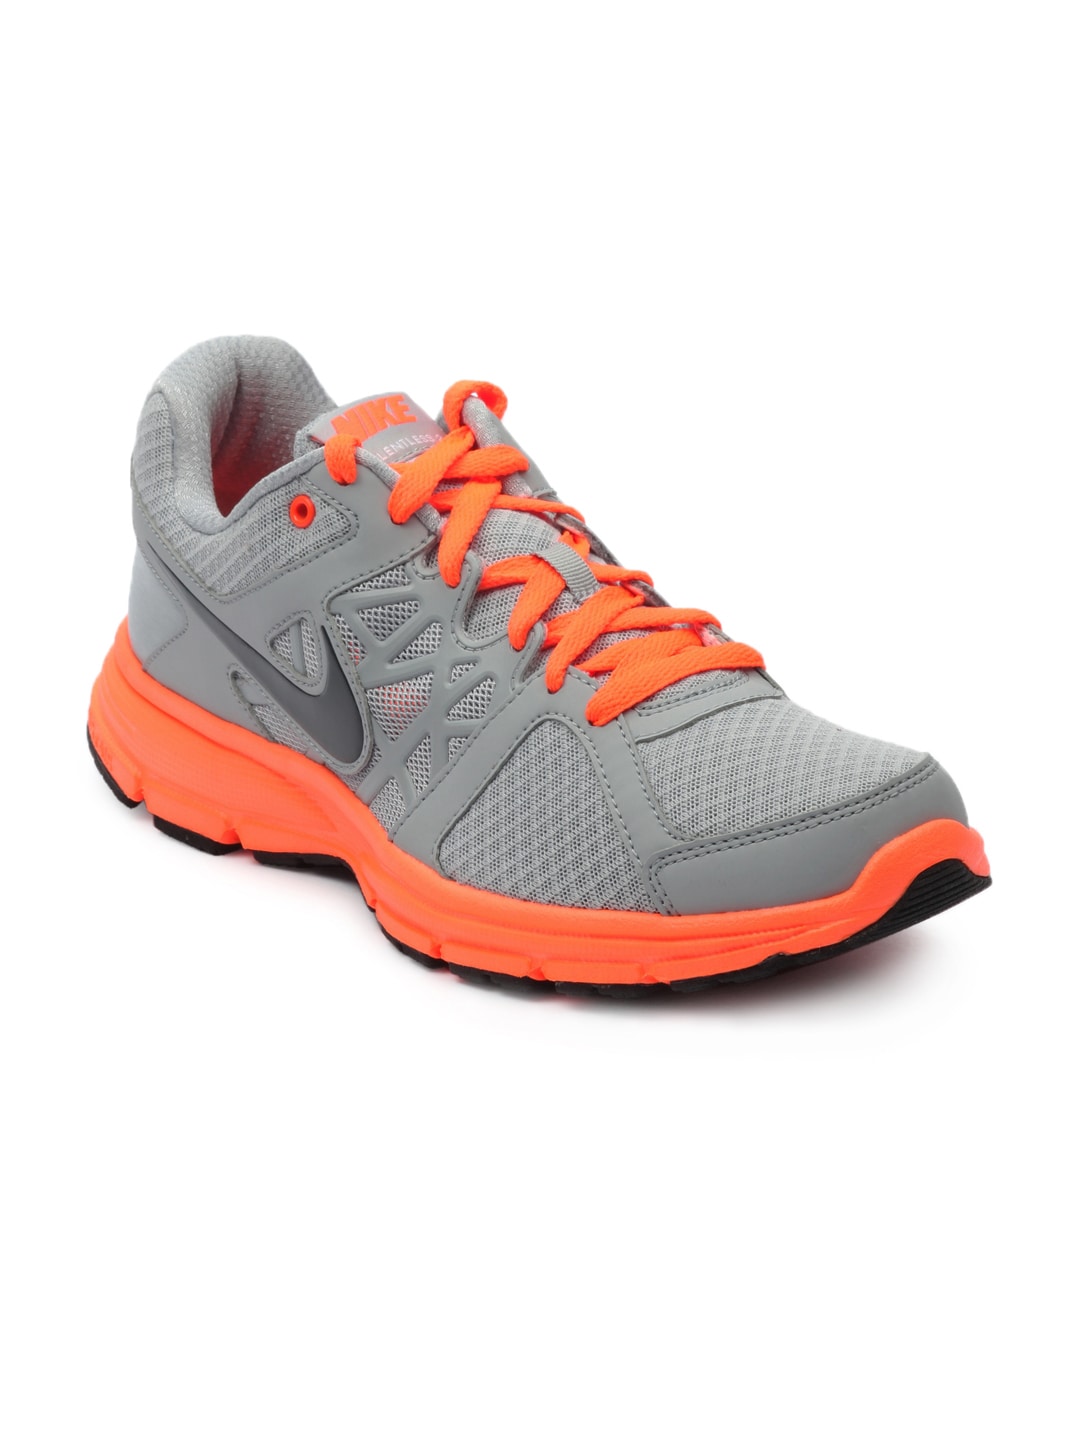 Nike Men Air Relentless Grey Sports Shoes